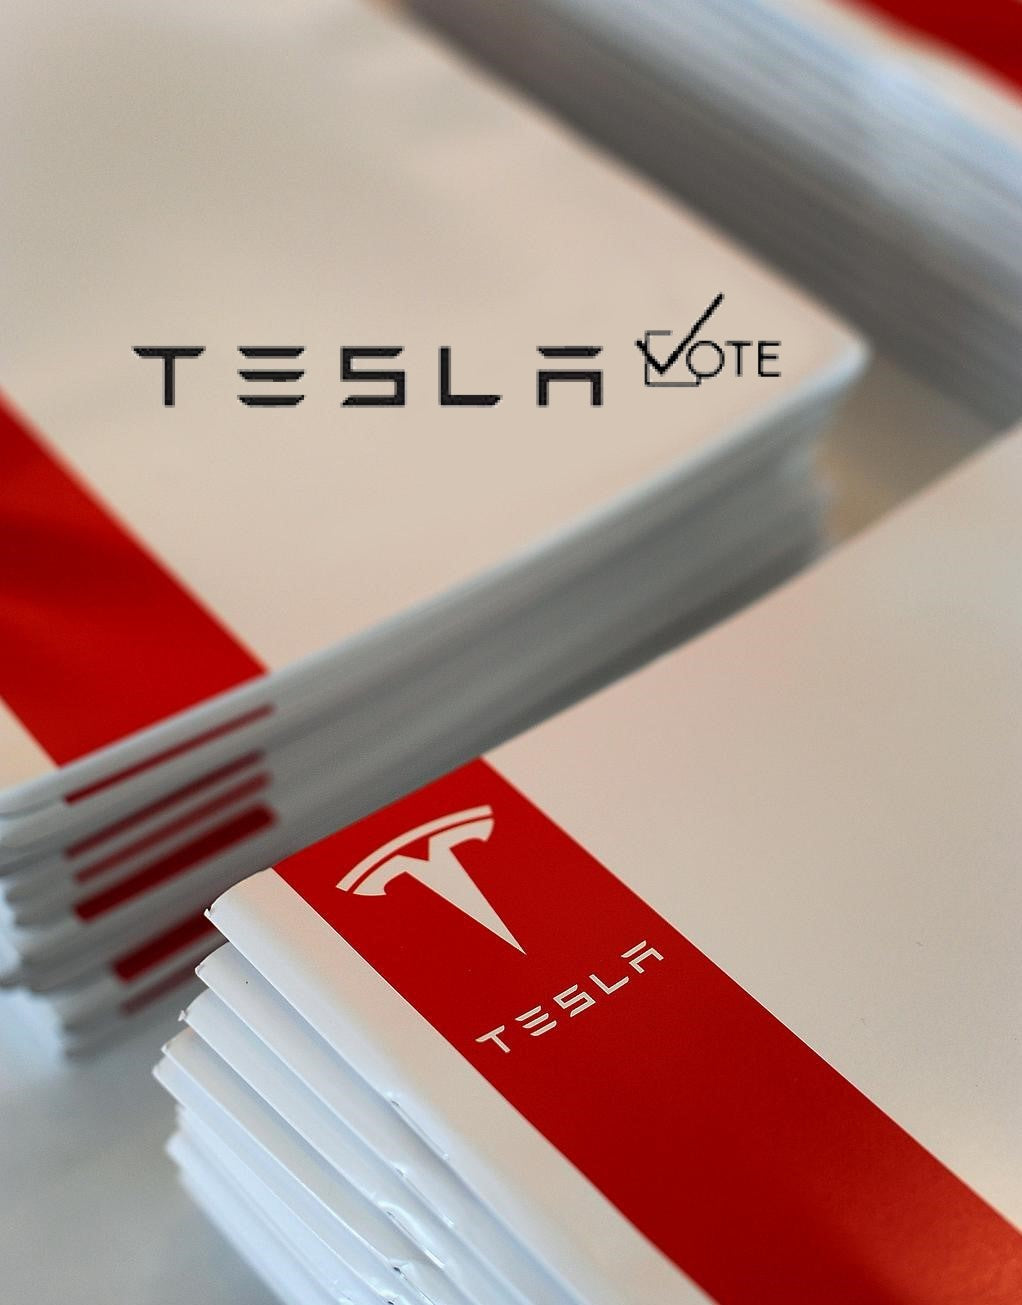 Tesla Shareholders Meeting 2020 On July 7